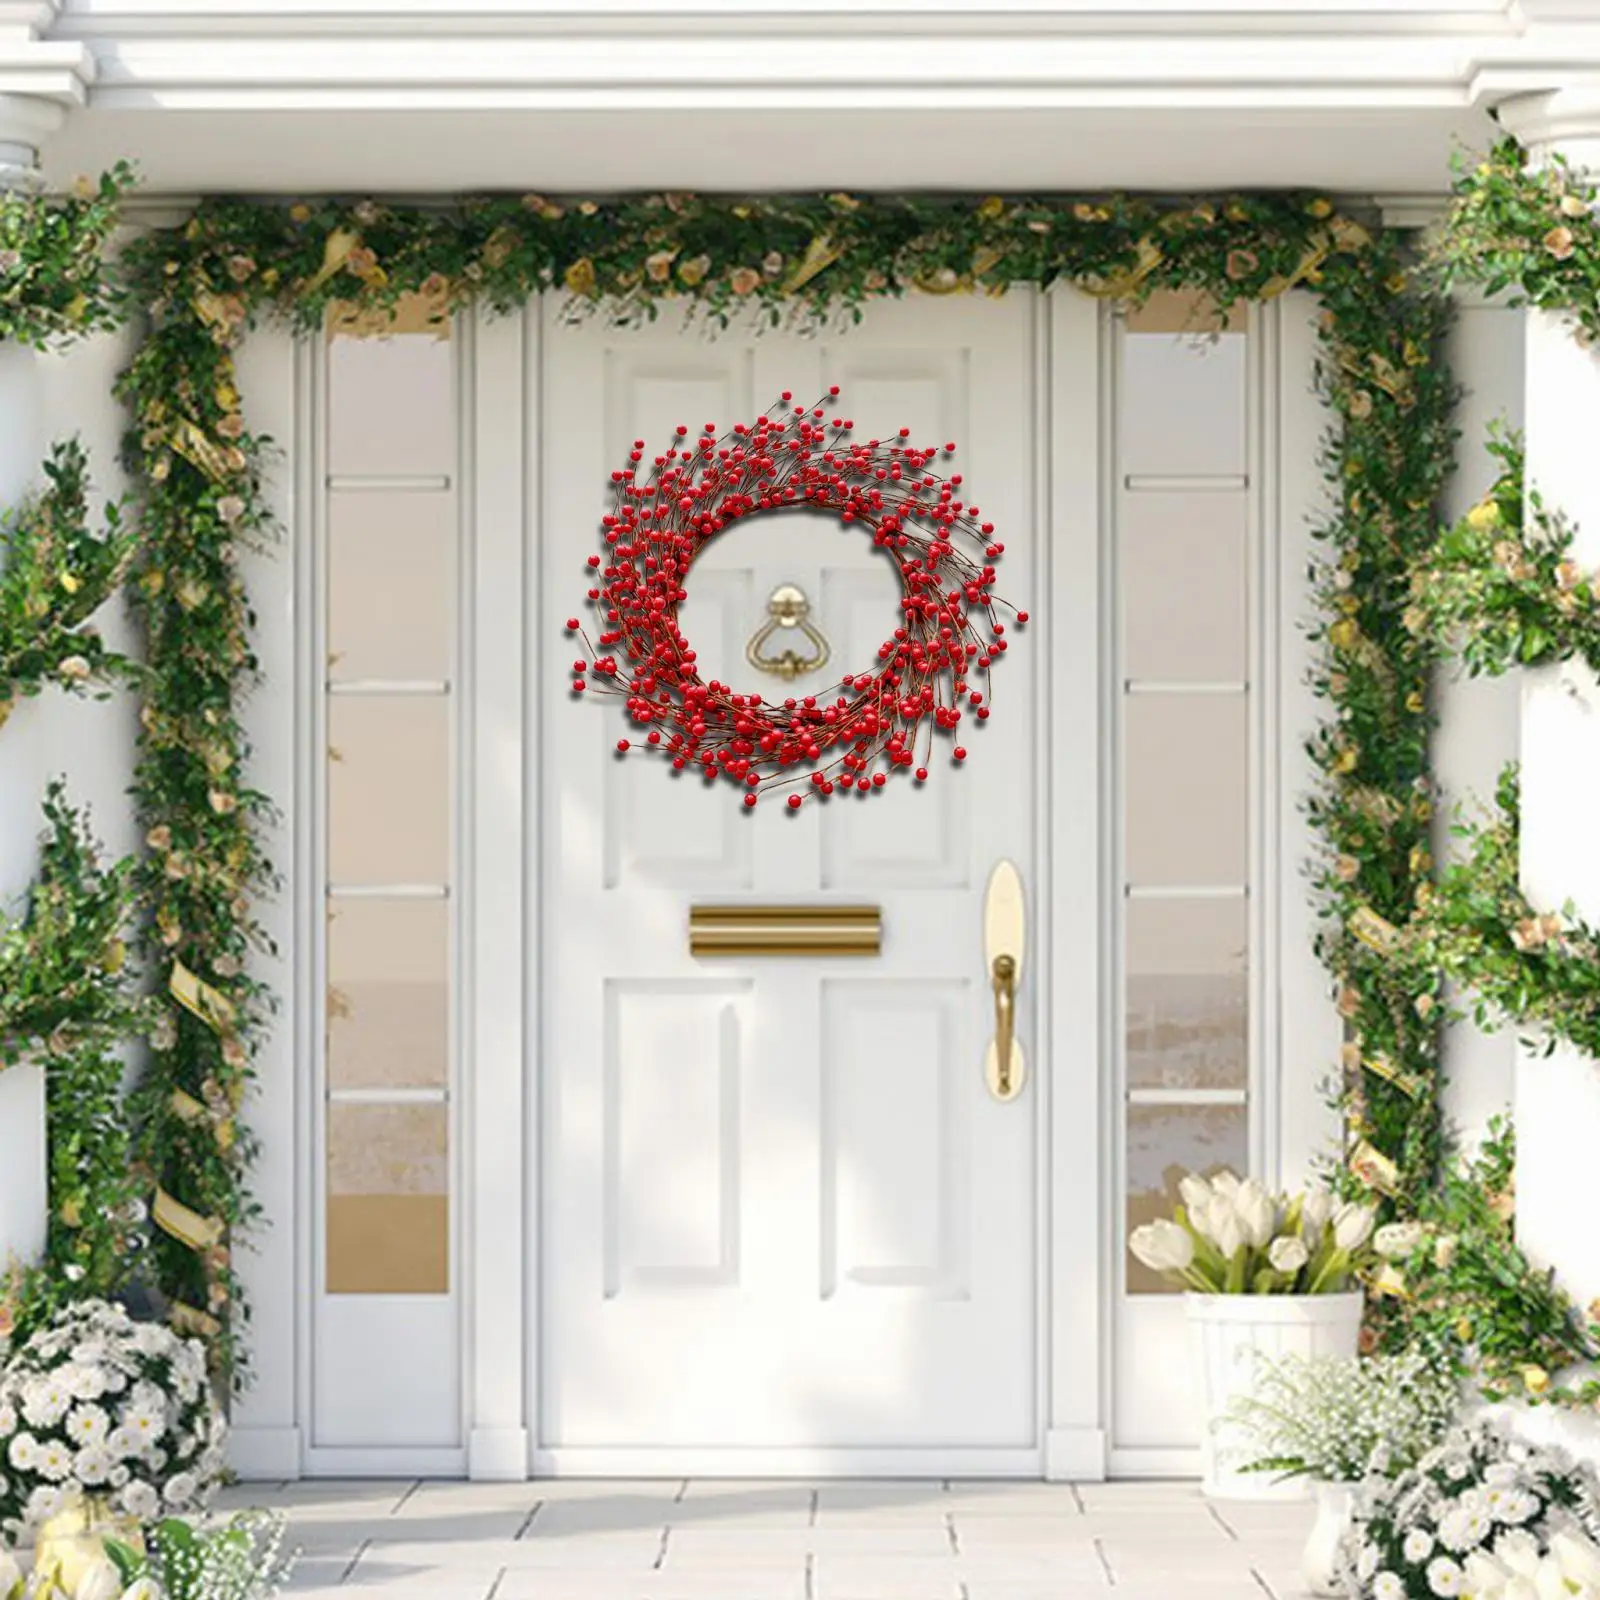 Red Berries Christmas Wreath Front Door Christmas Wreath Artificial Christmas Wreath for Indoor ,Wall,Home Decoration